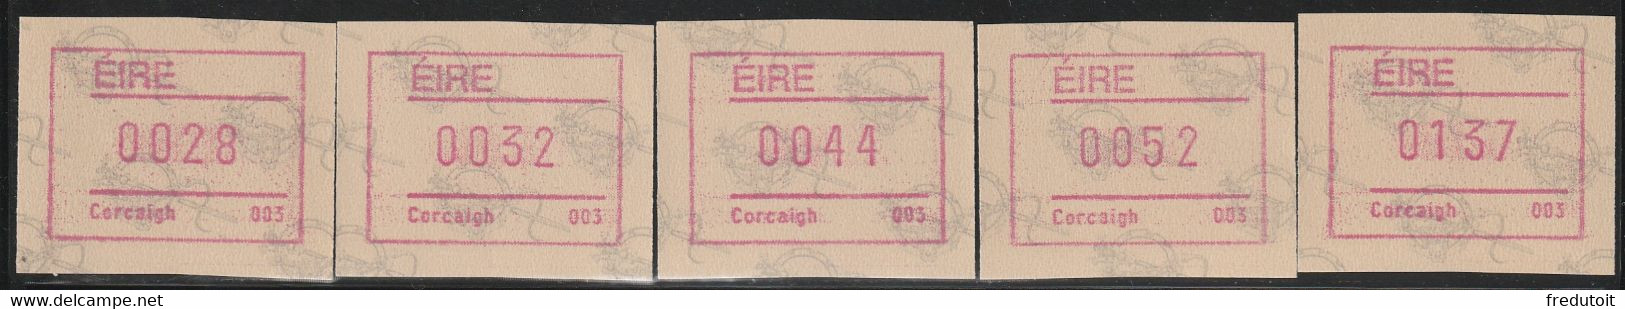 IRLANDE - Timbres Distributeurs / FRAMA  ATM - N°4** (1992) Corcaigh 003 - Automatenmarken (Frama)